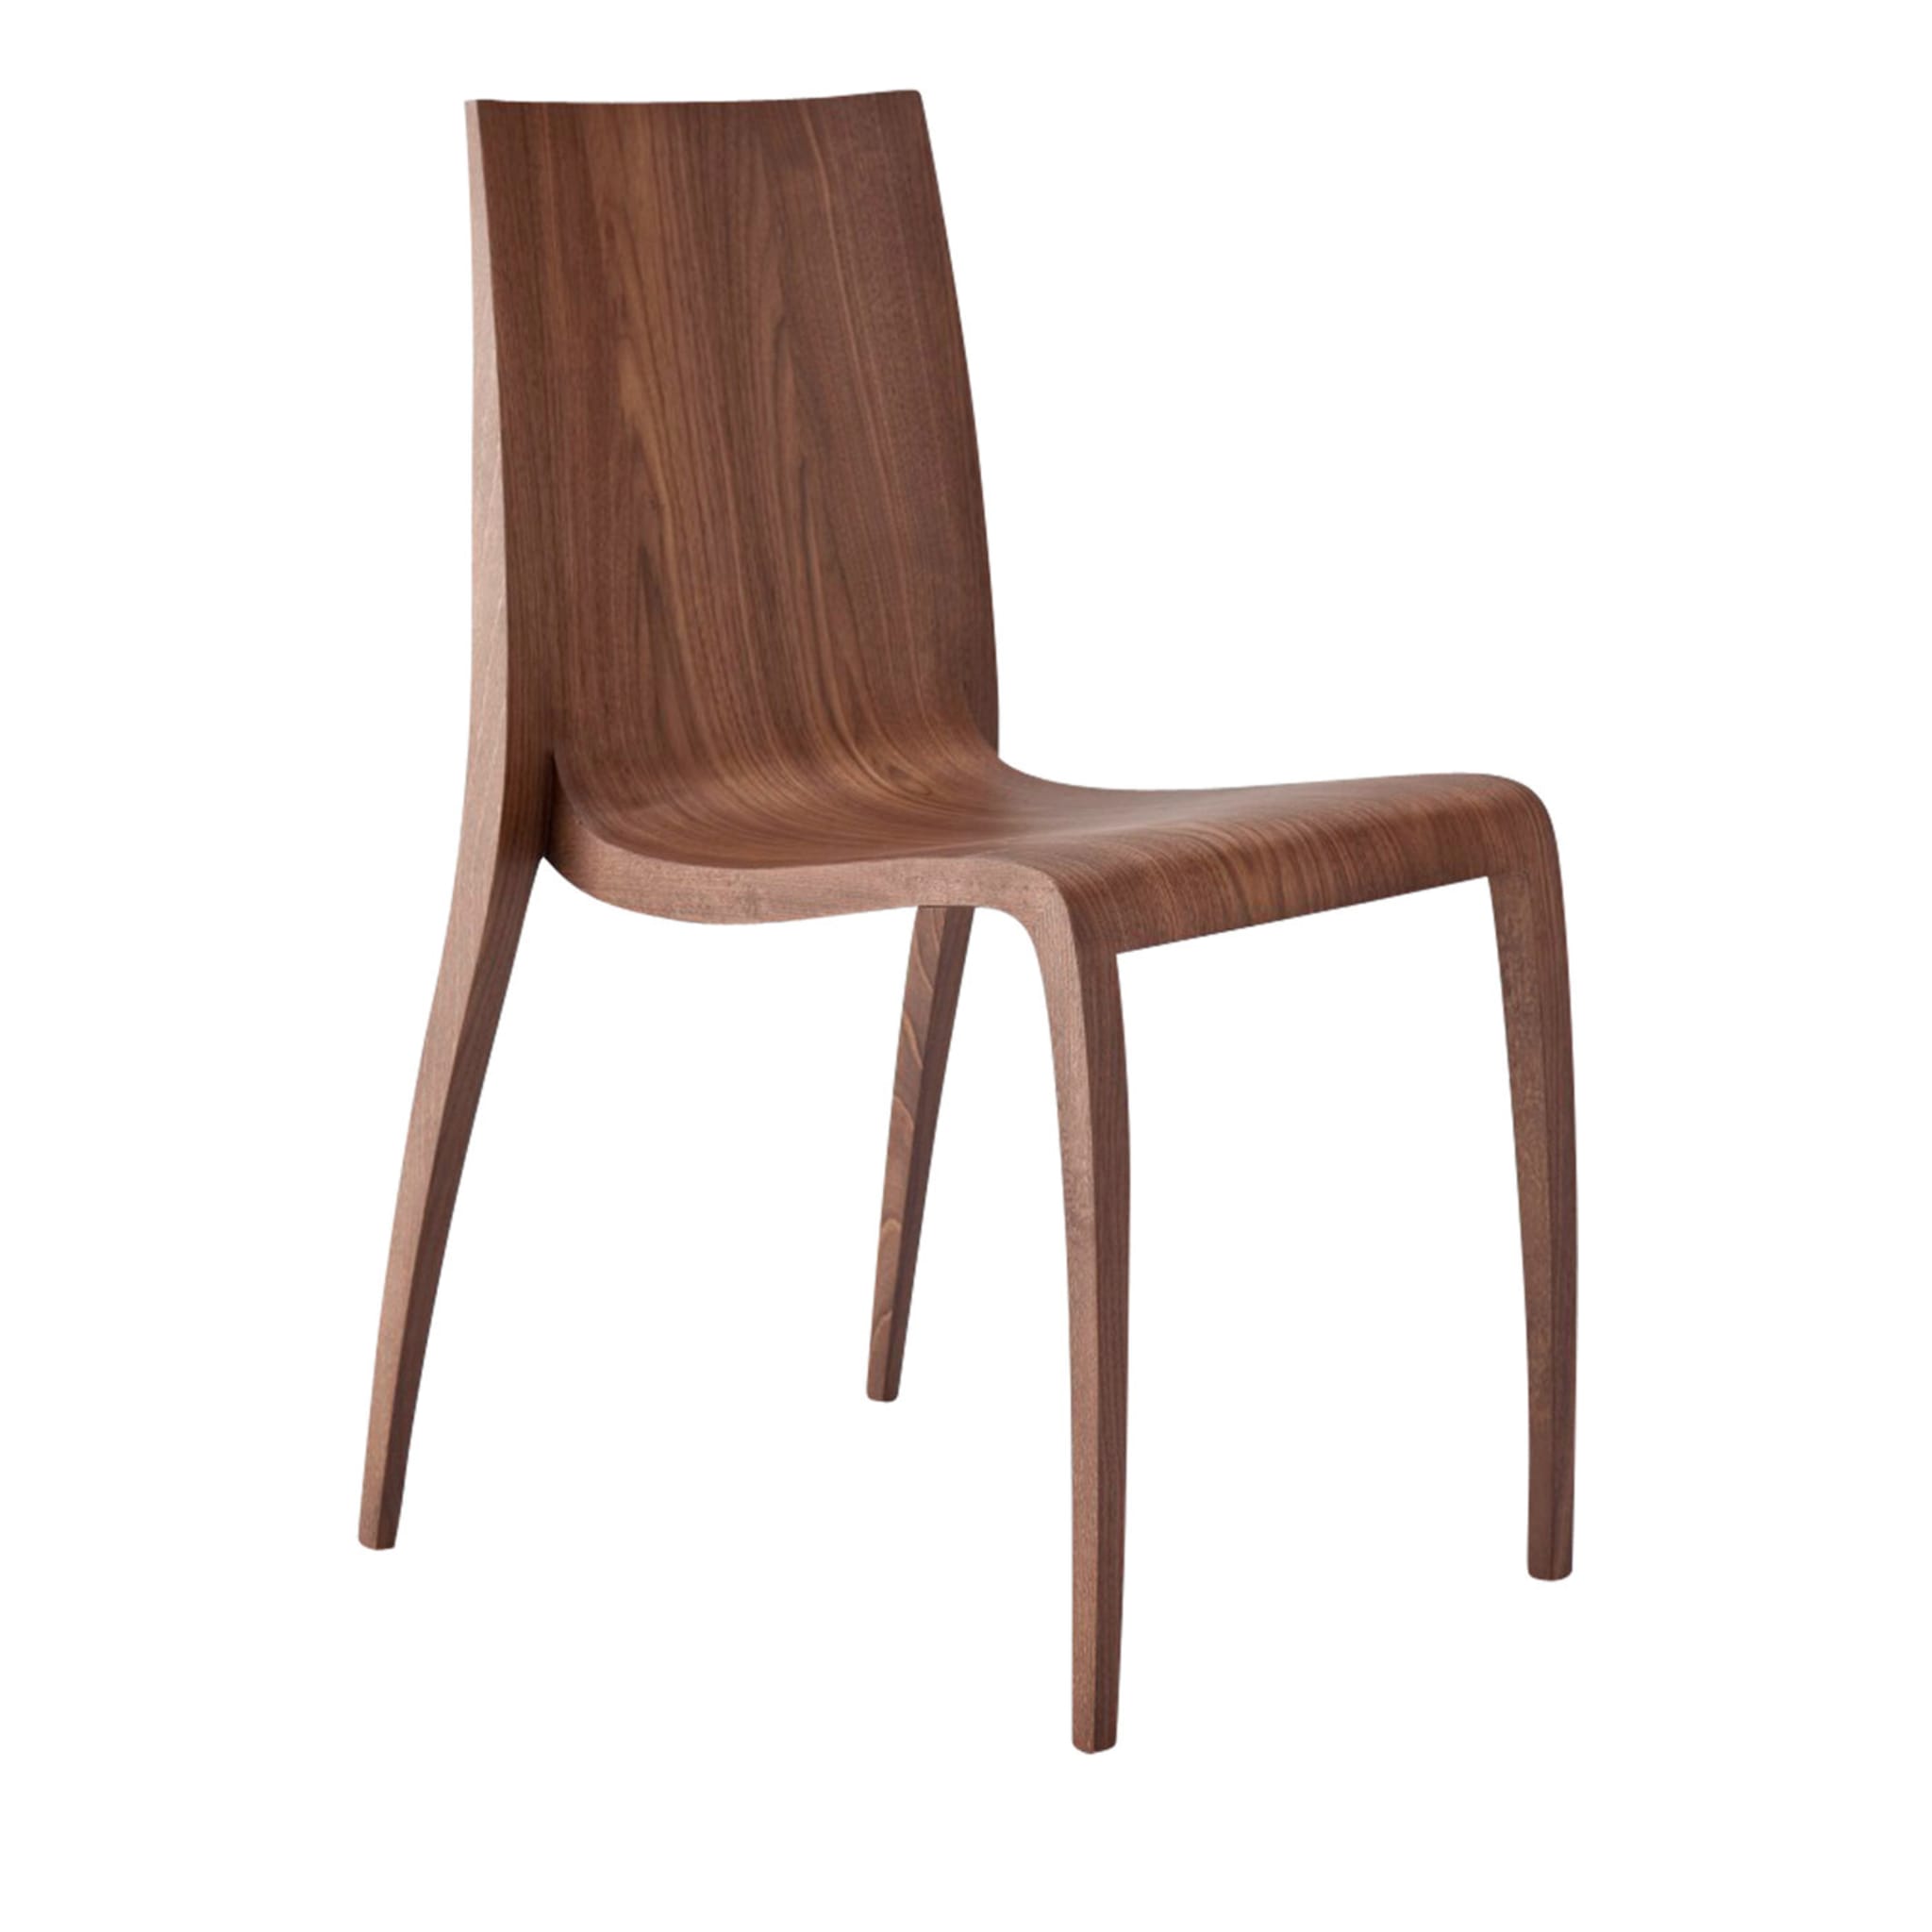 Set of 2 Ki Wood Chairs by Mario Bellini - Main view